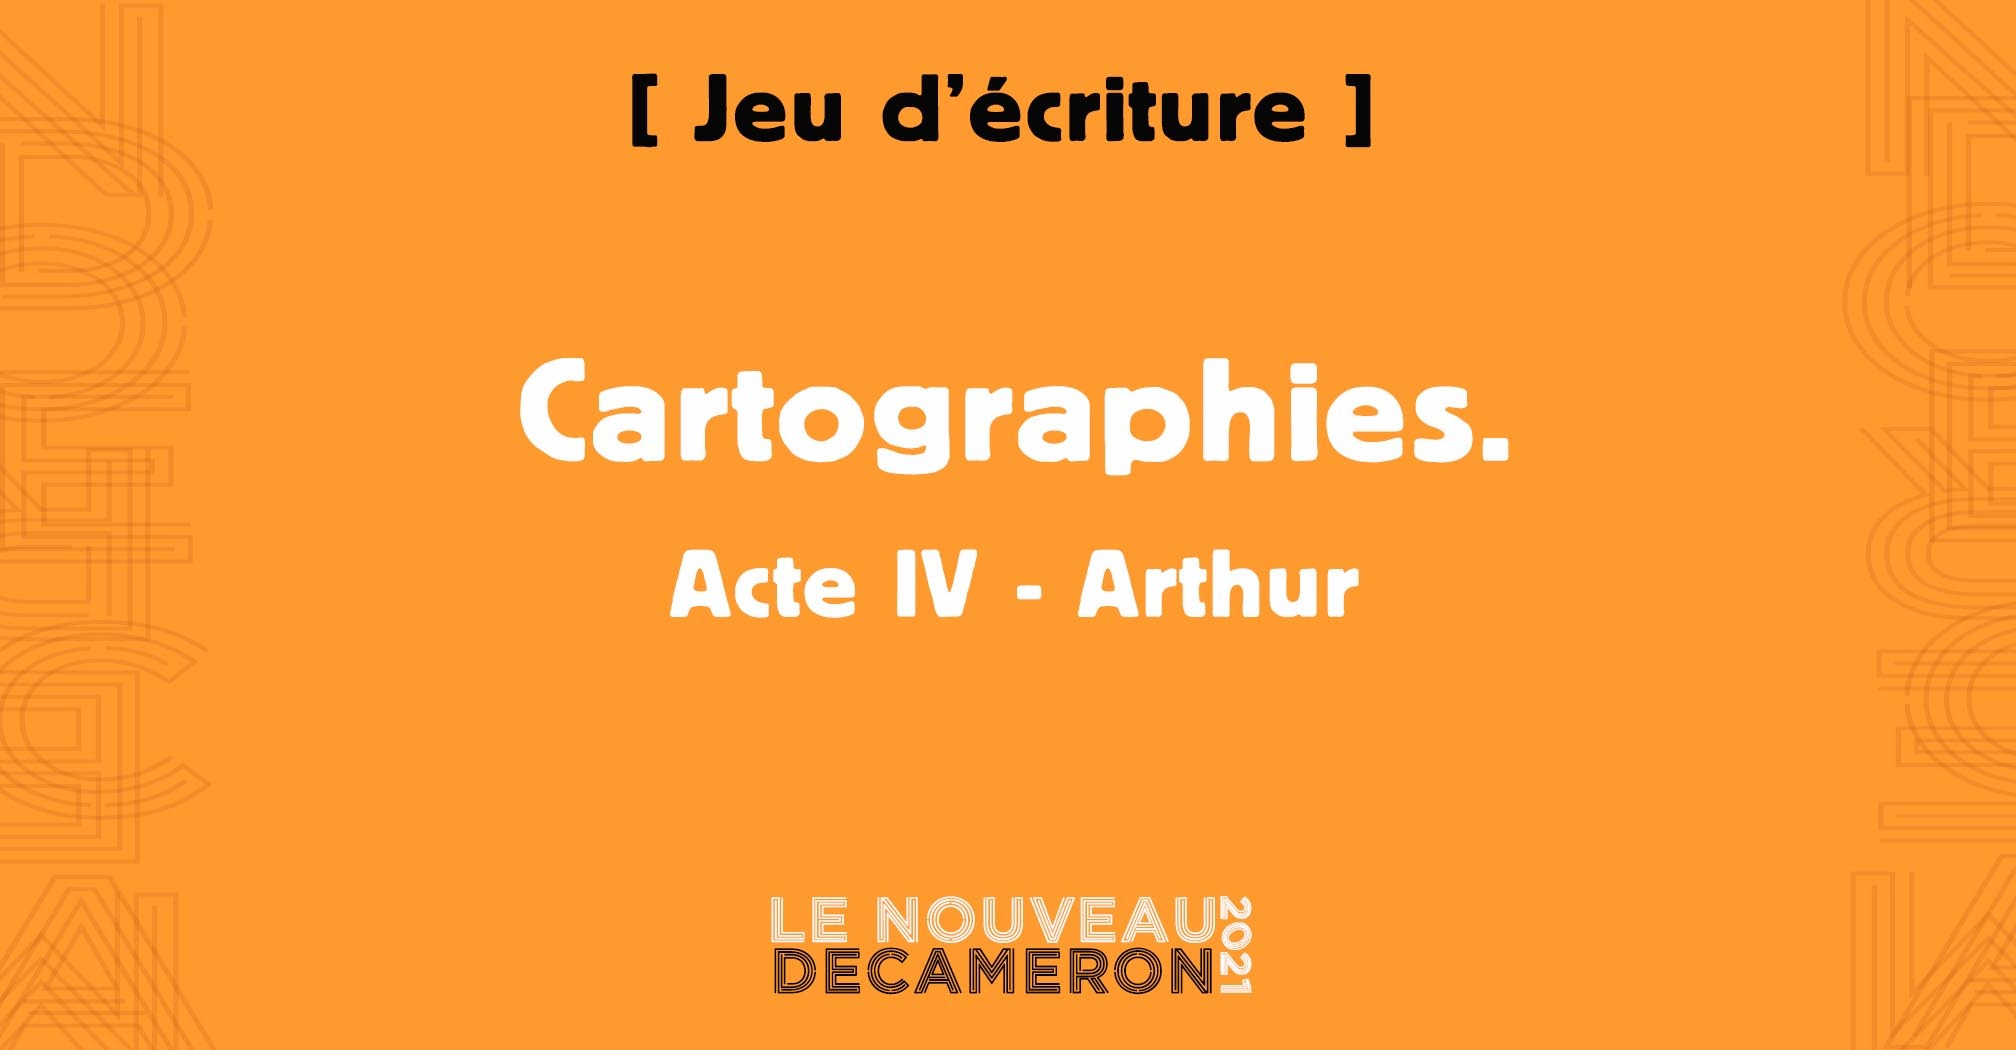 Cartographies. Acte IV - Arthur